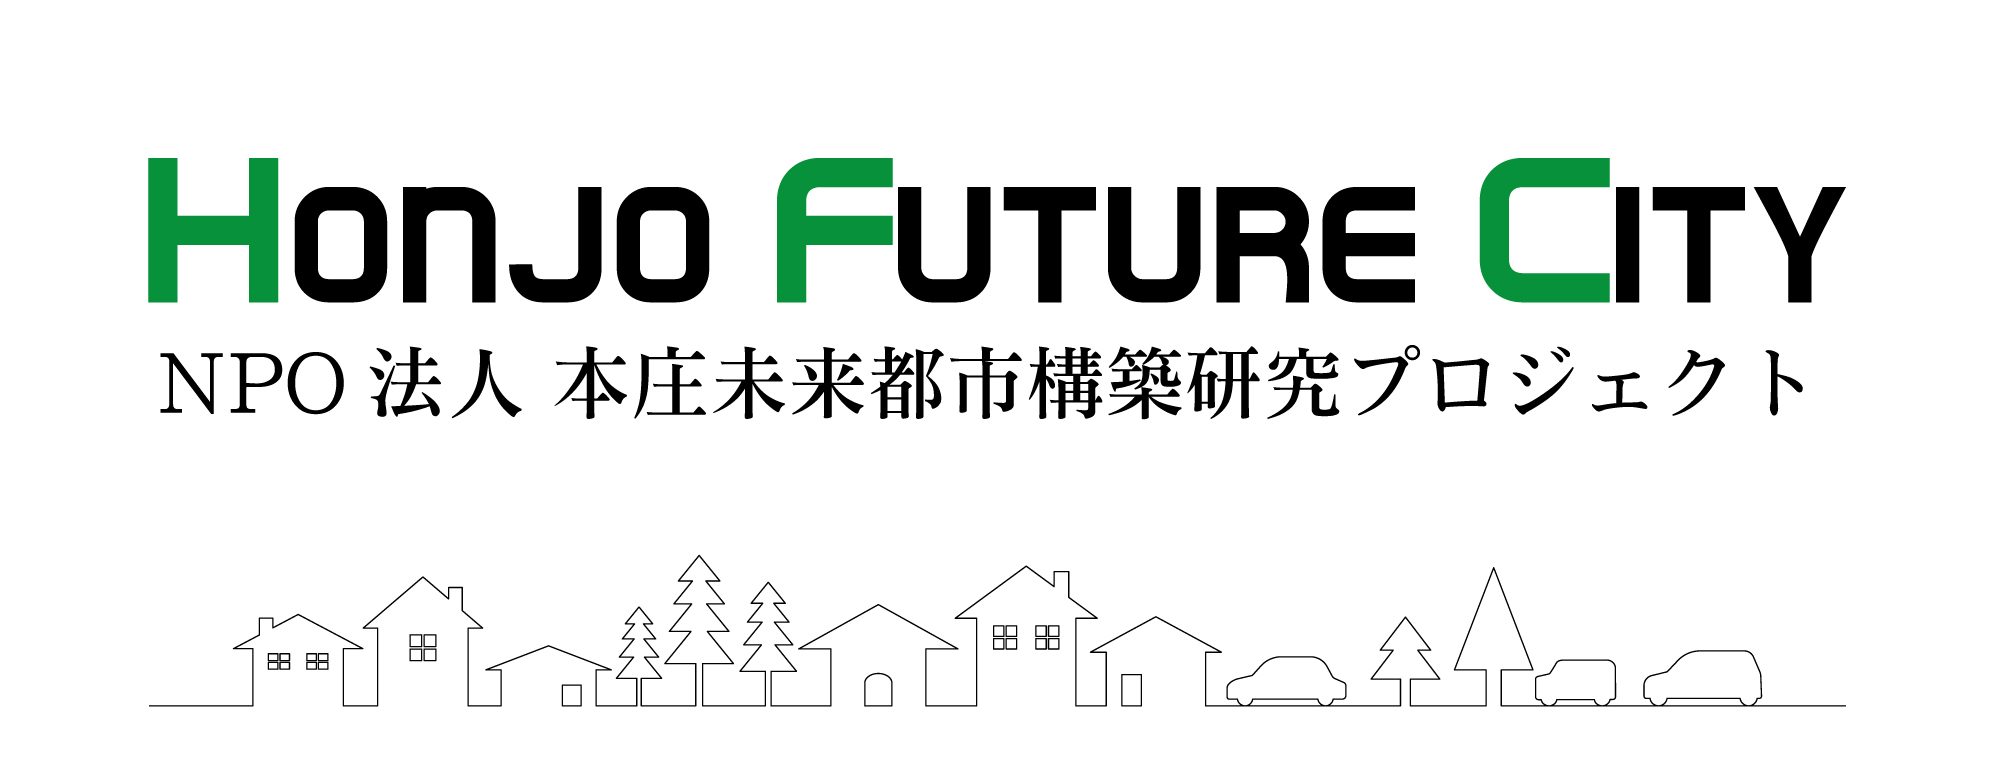 NPO法人 本庄未来都市構築研究プロジェクト